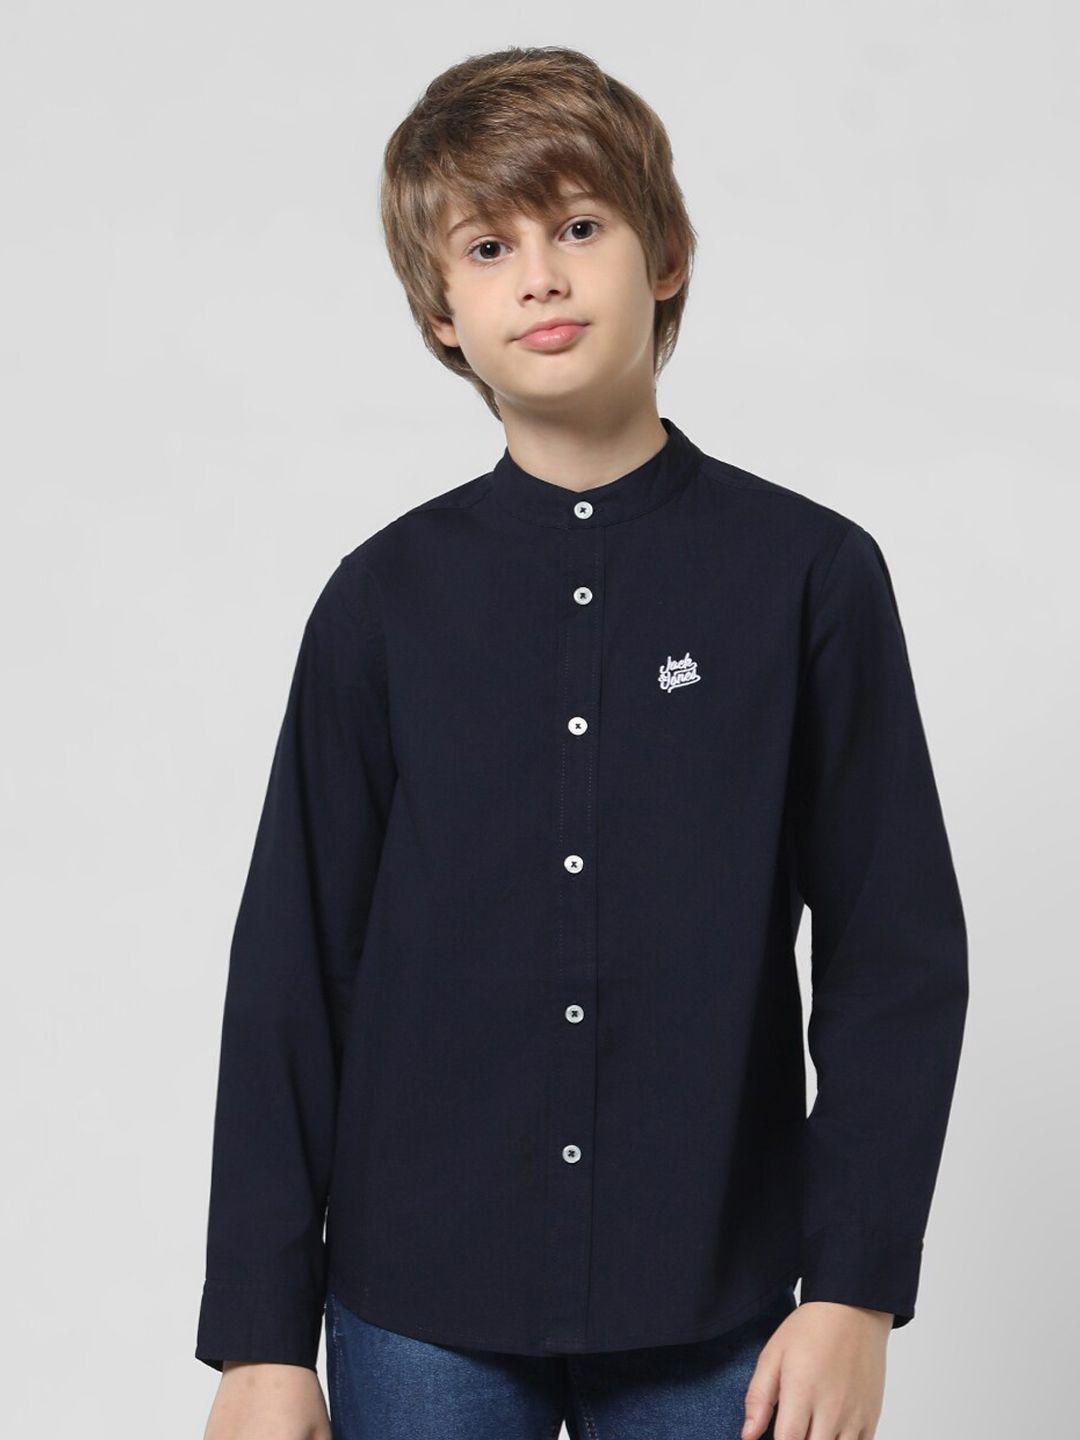 jack-&-jones-junior-boys-brand-logo-printed-band-collar-cotton-casual-shirt